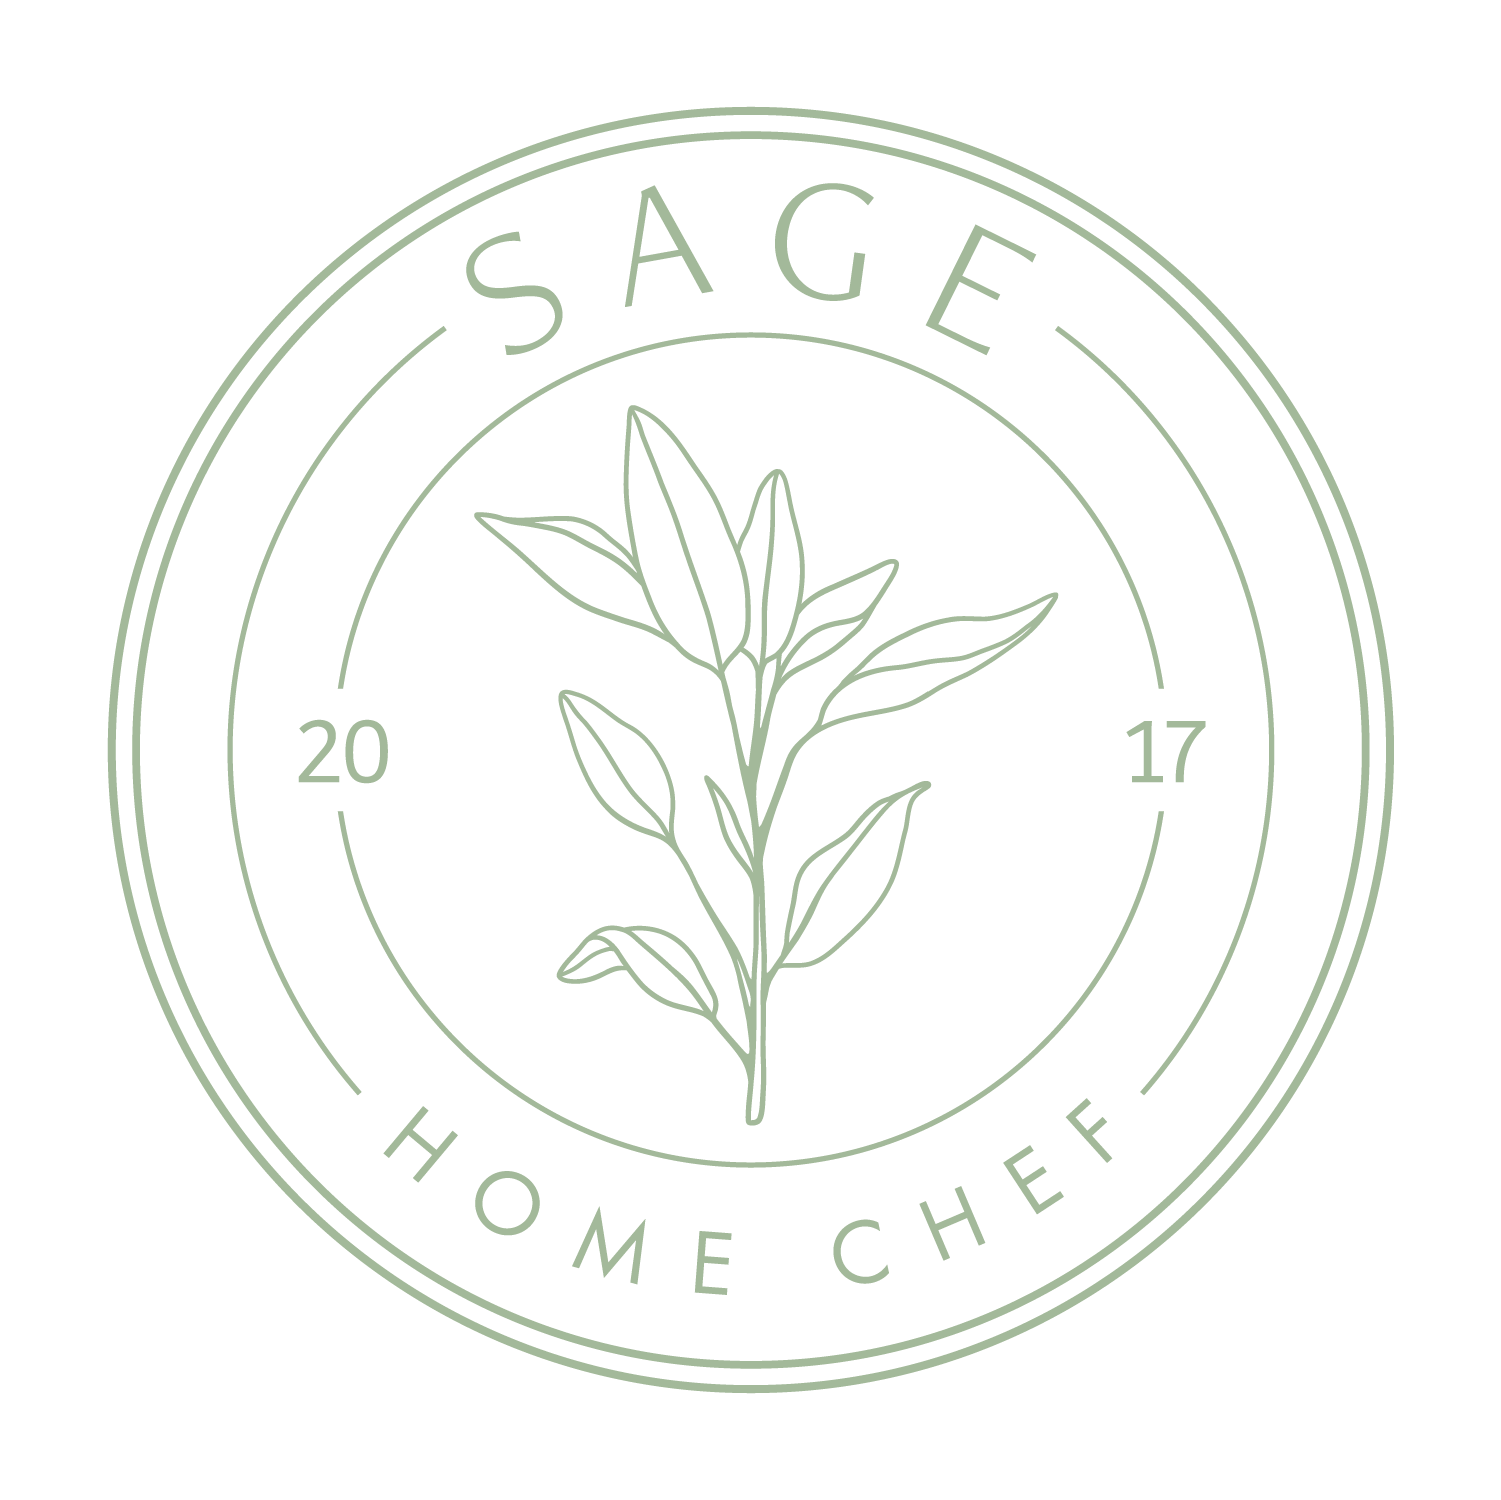 Winner Image - Sage Home Chef